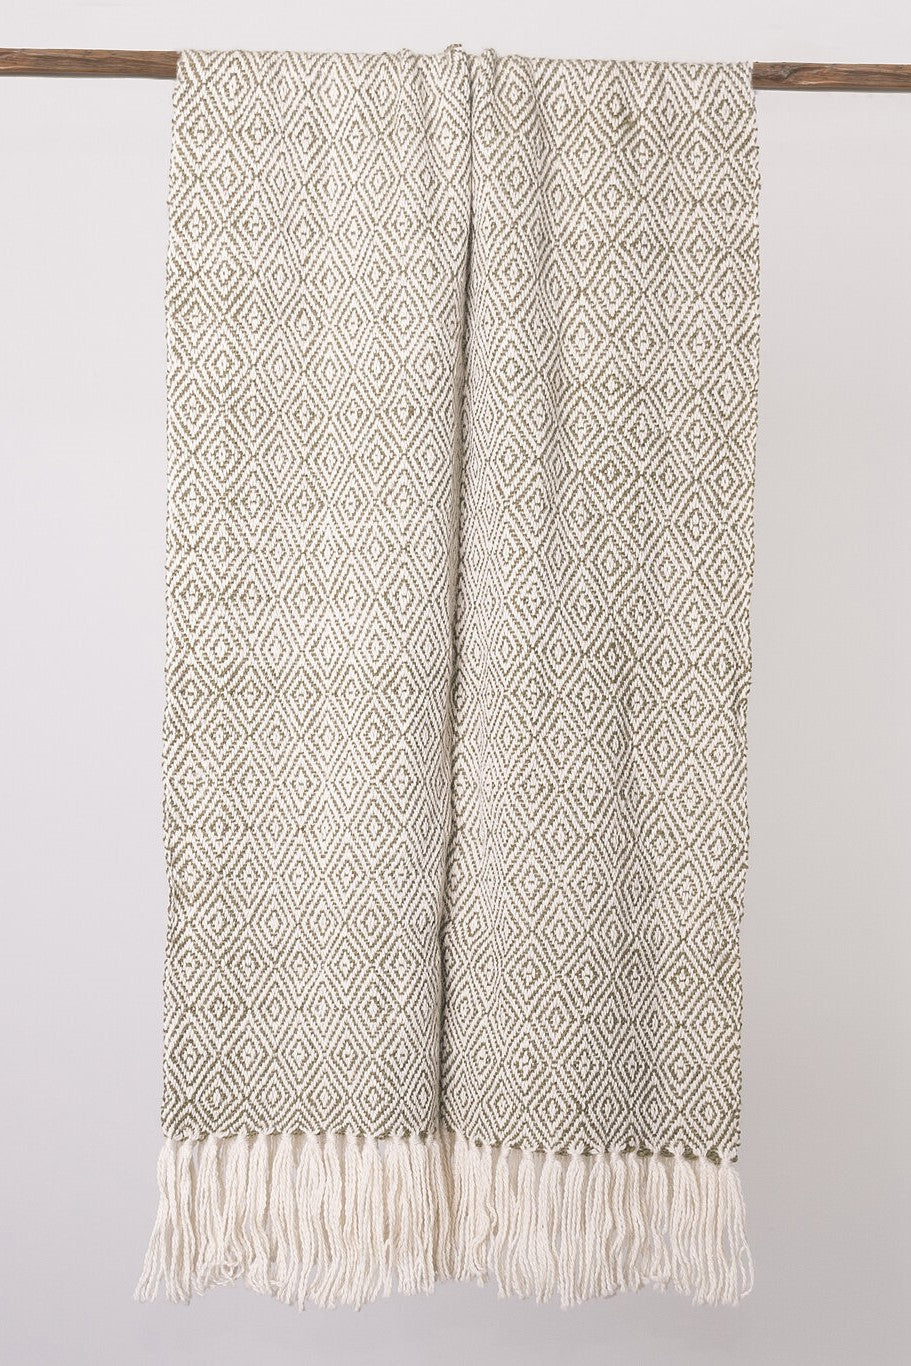 Lama wool blanket handwoven